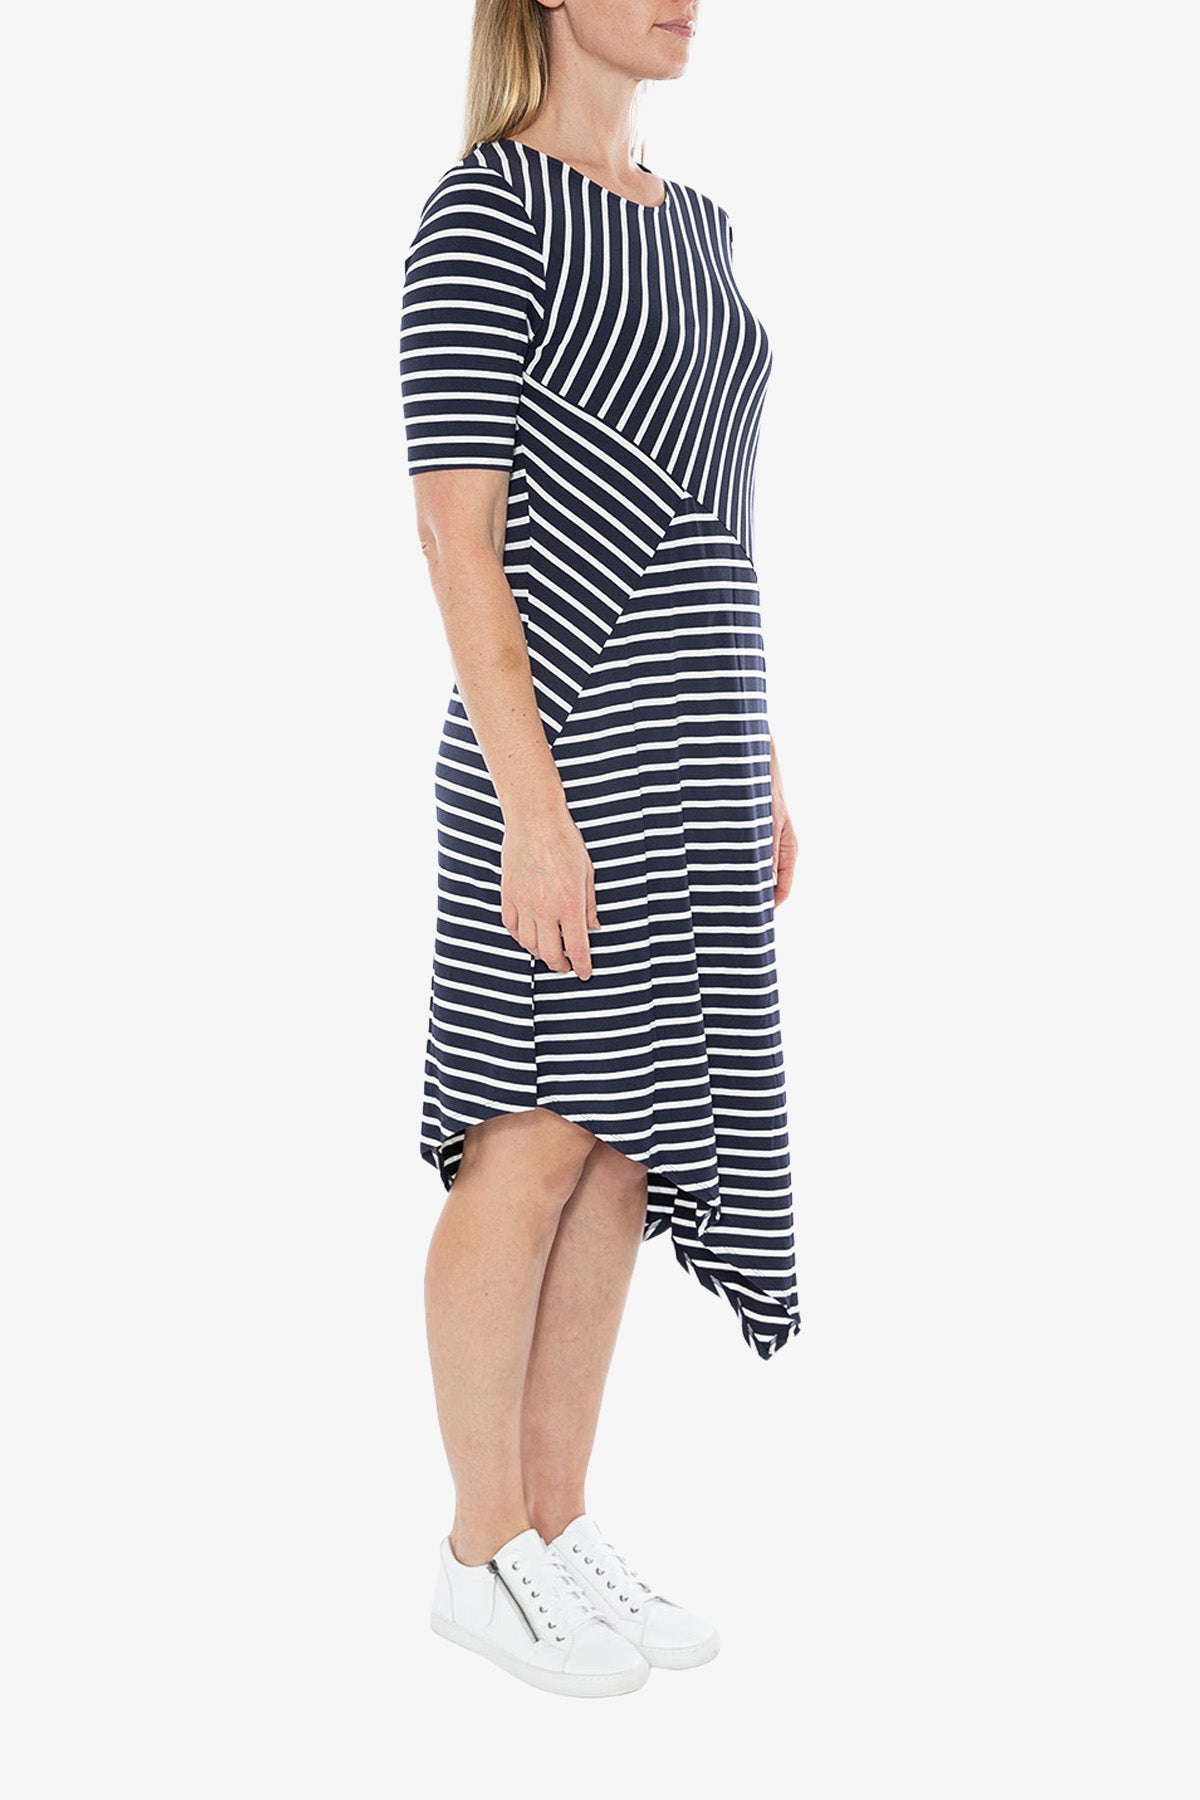 Elbow Sleeve Spliced Stripe Dress Navy and Ivory